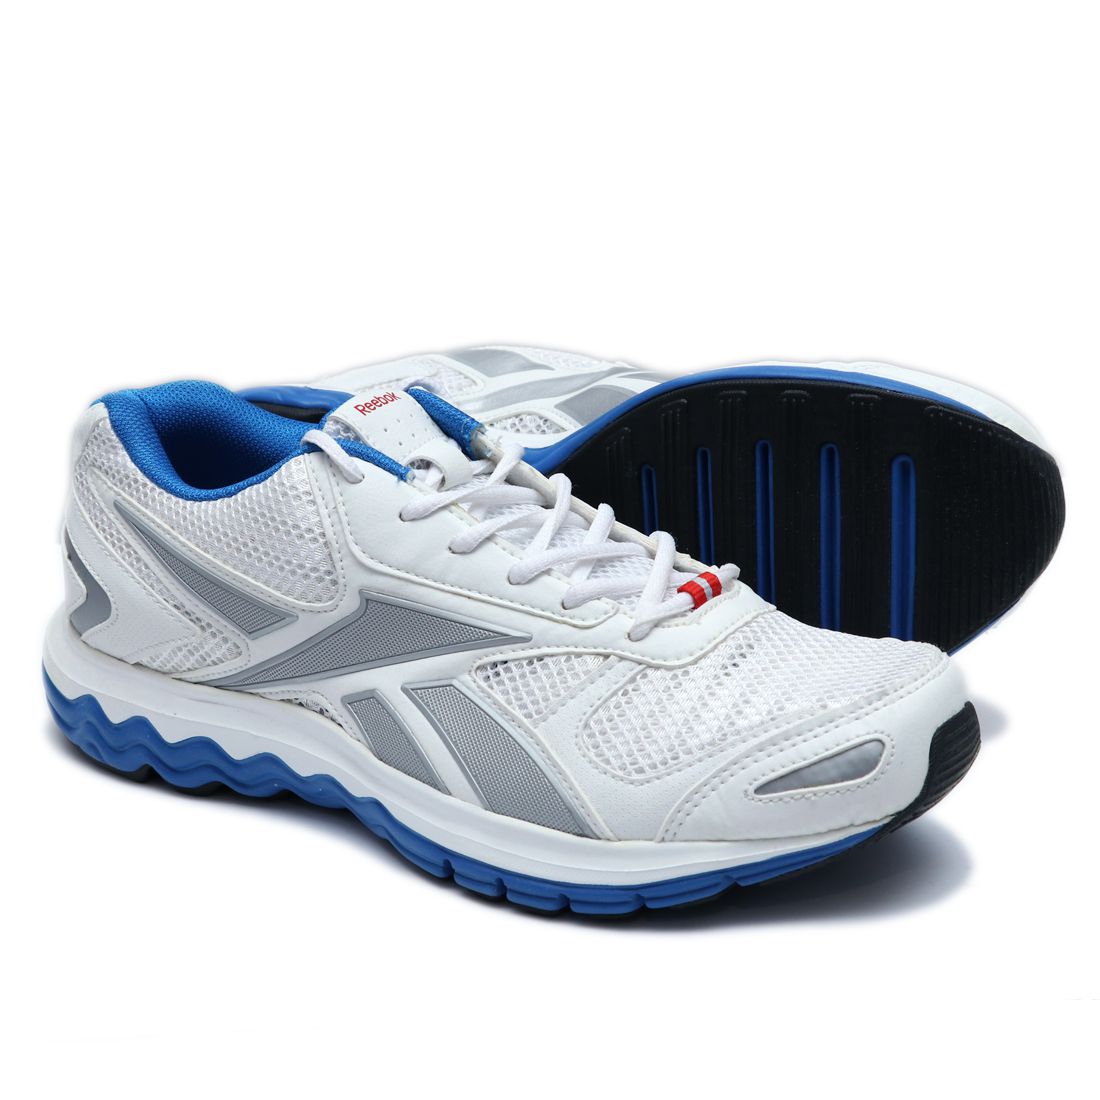 Reebok Fuel Extreme J91385 White Running Shoes - Buy Reebok Fuel ...